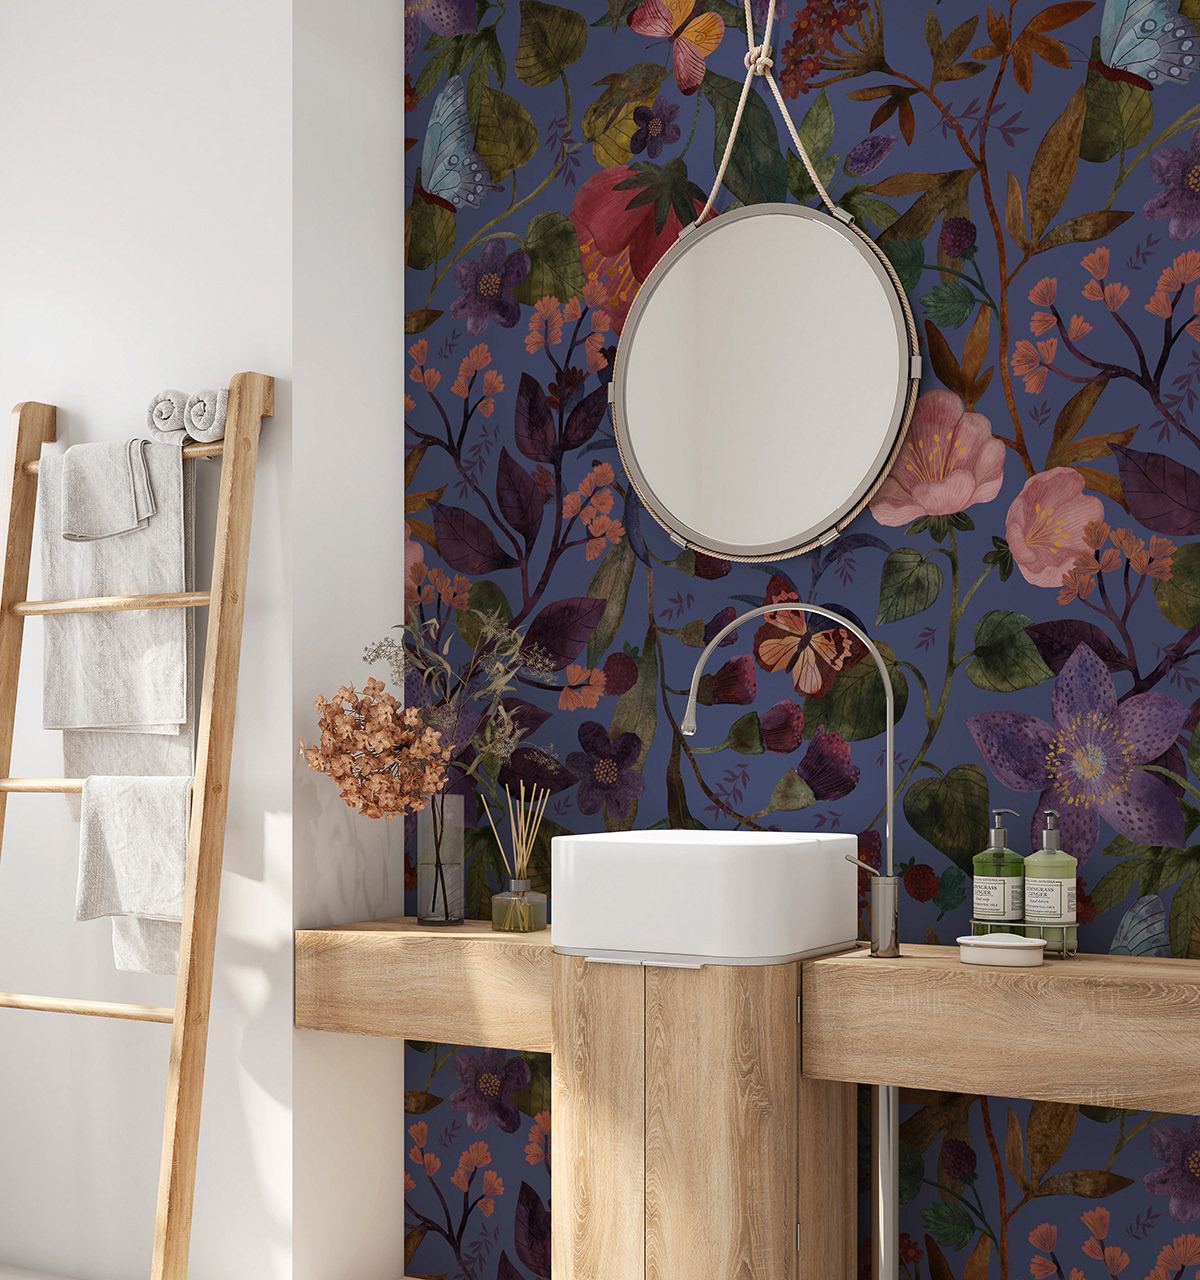 wallpaper pattern textile floral watercolor art seamless pattern design decoration